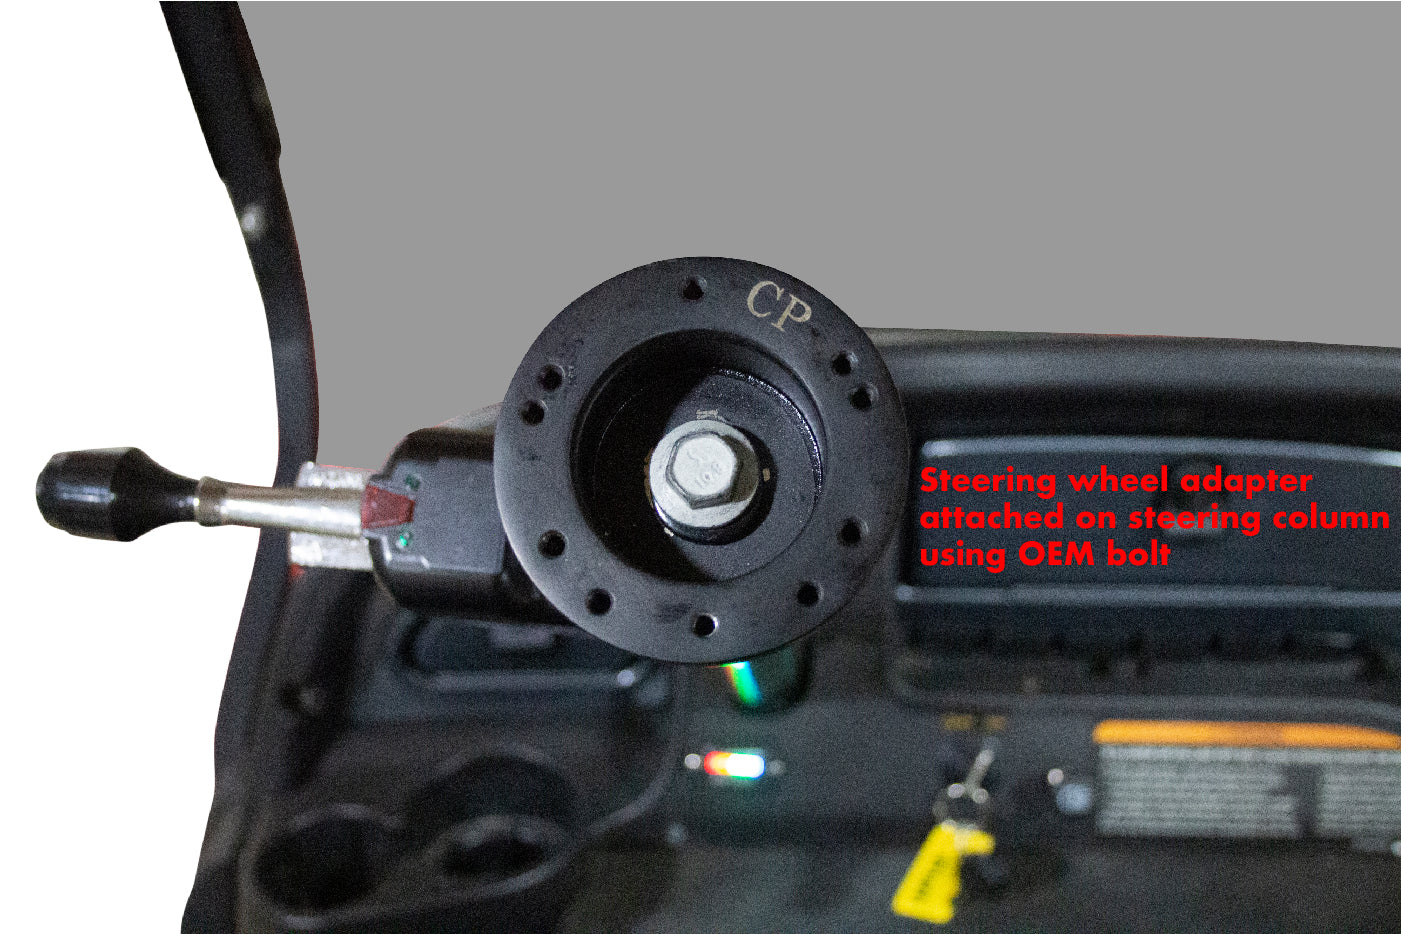 Golf cart steering wheel adapter installed on steering column